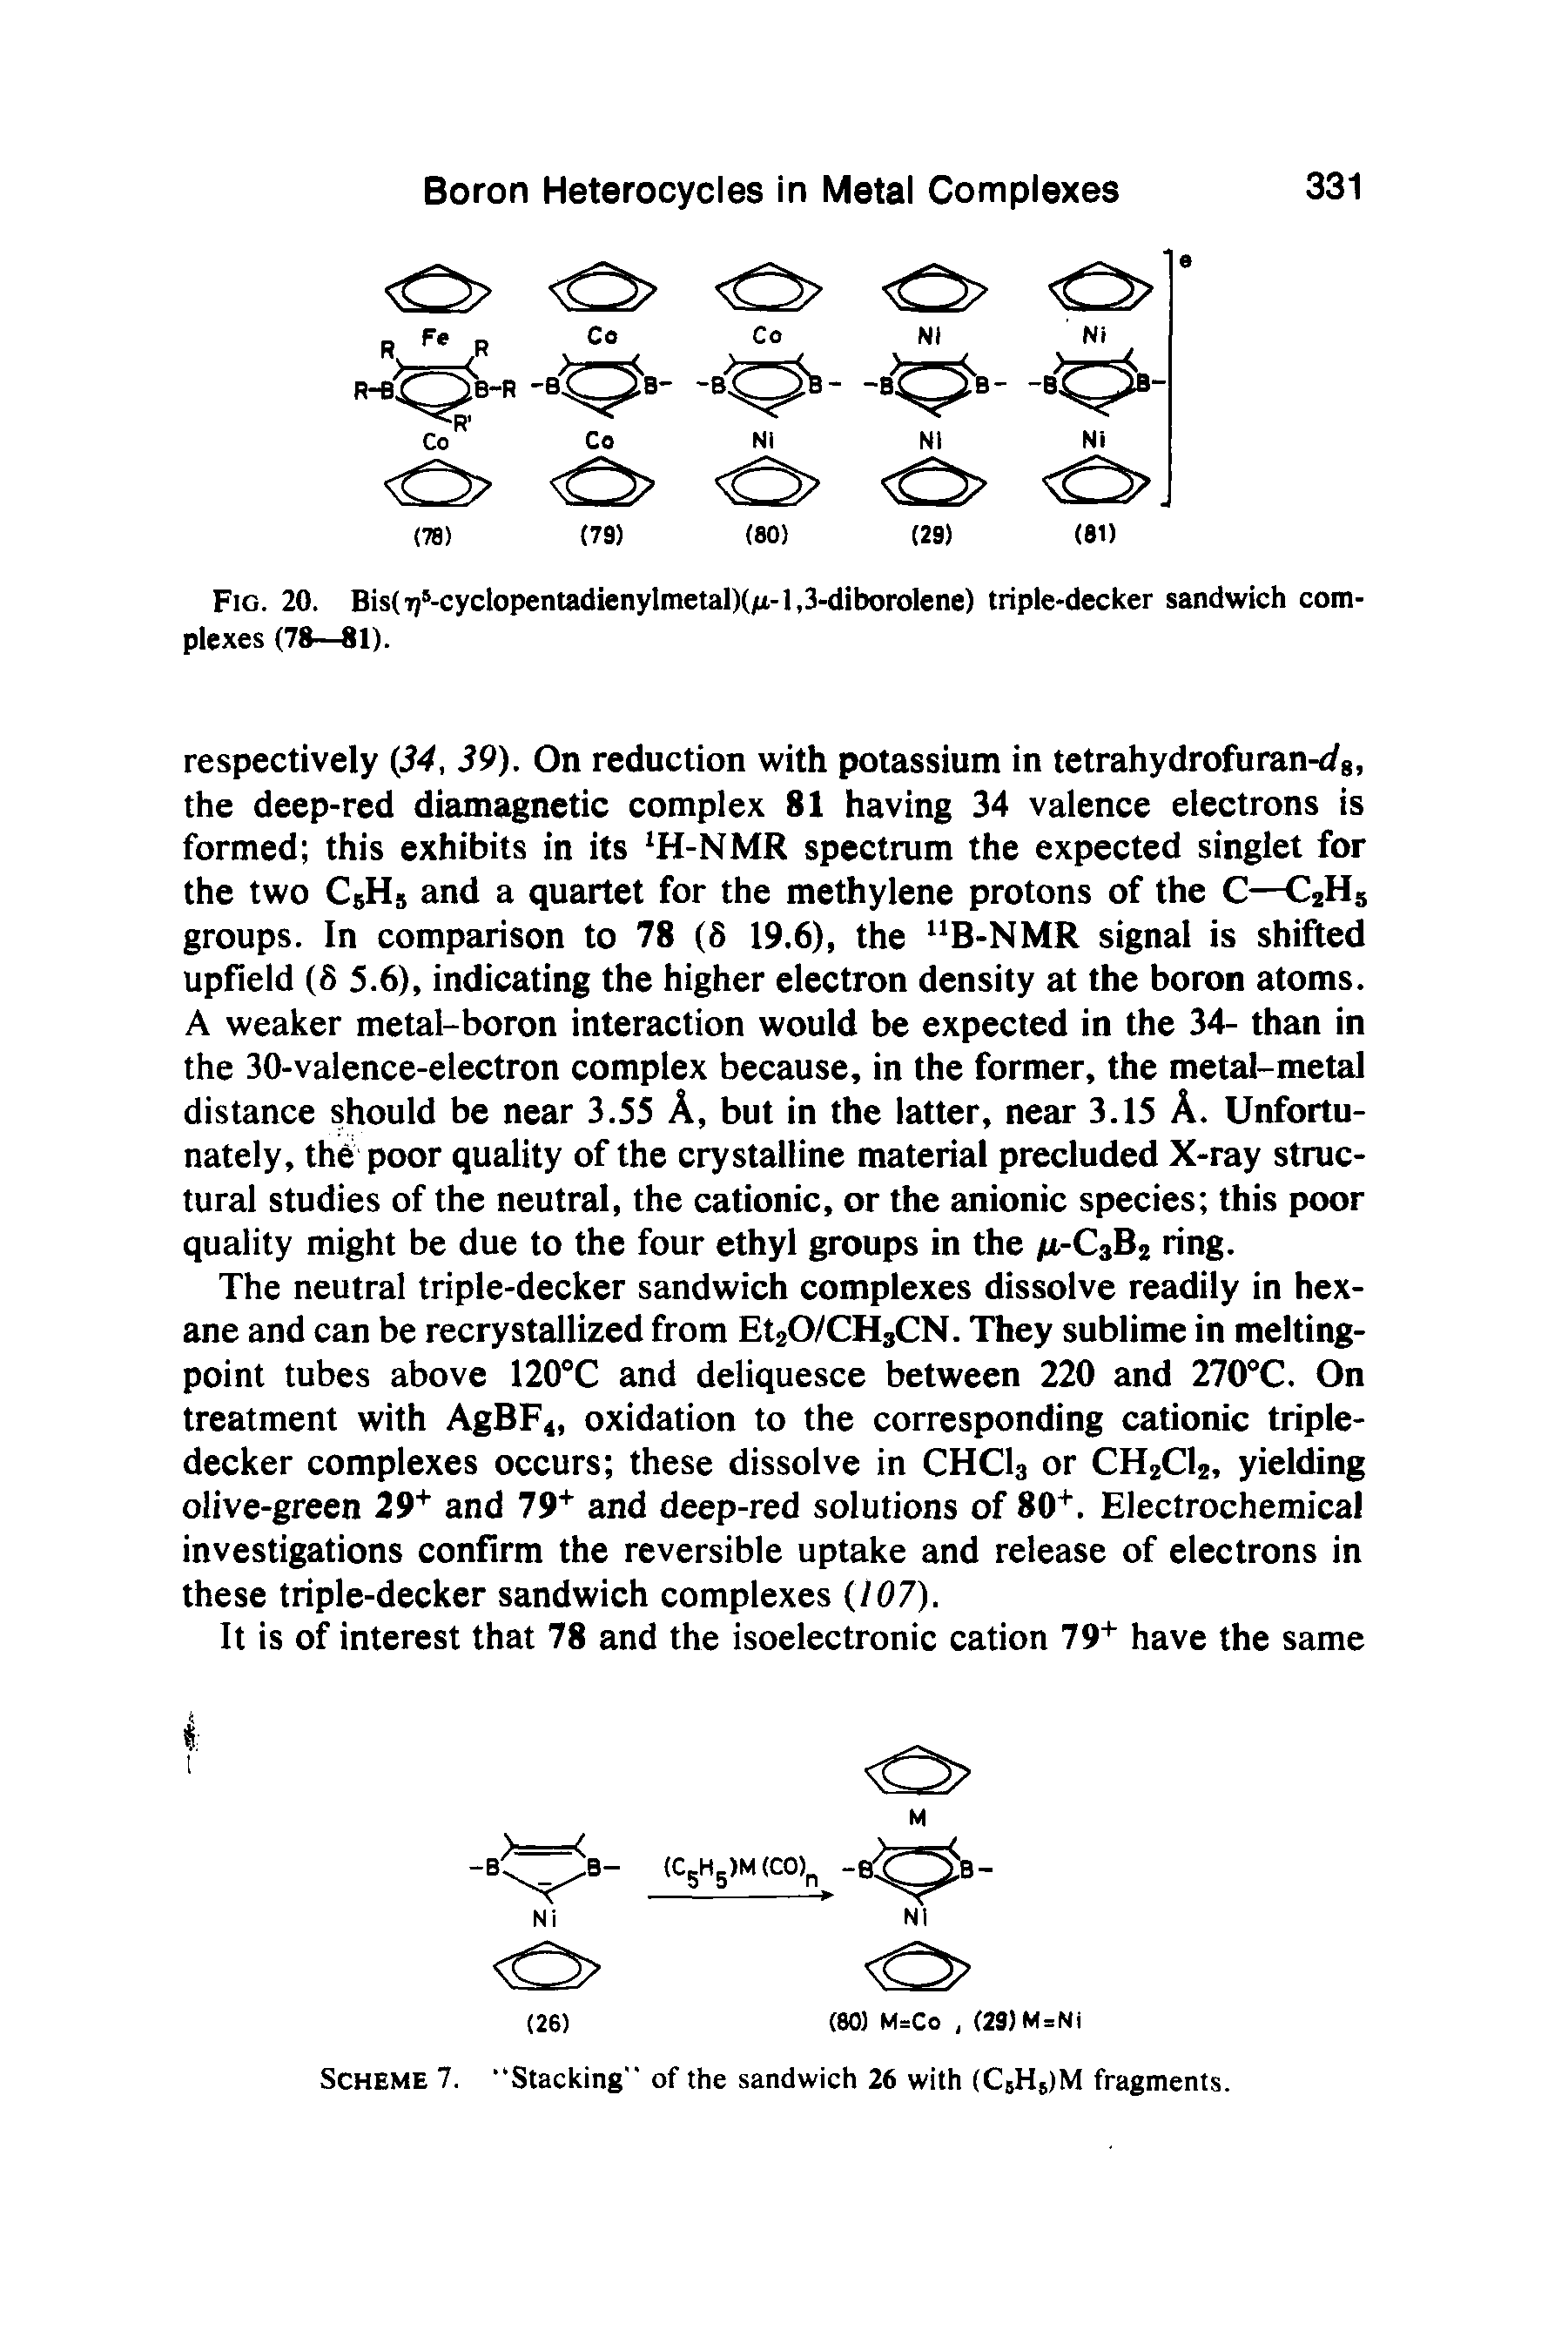 Fig. 20. Bis( 7)5-cyclopentadienylmetal)(fi-1,3-diborolene) triple-decker sandwich complexes (78—81).